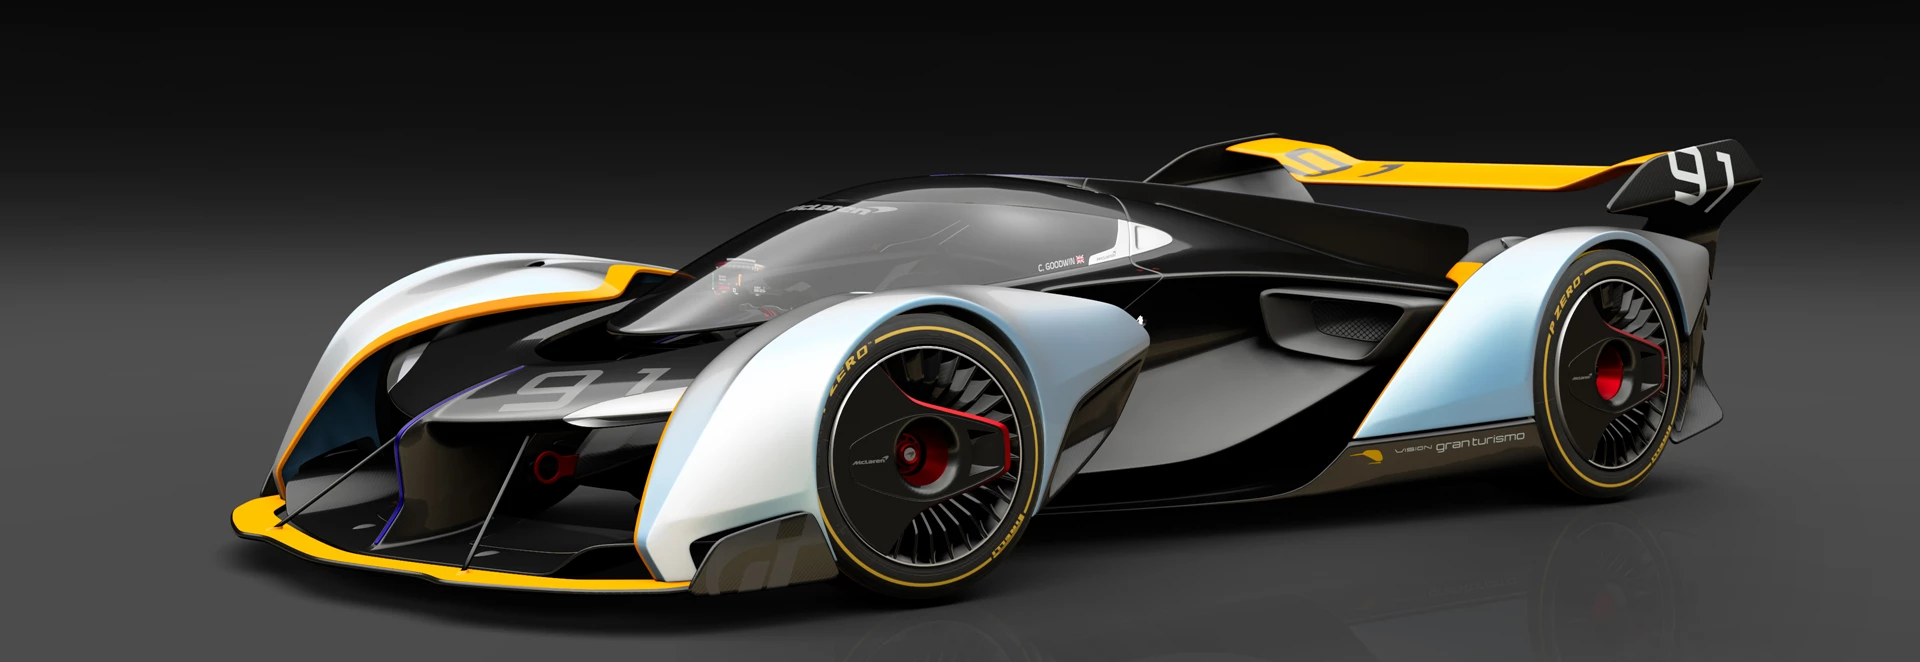 McLaren reveals Gran Turismo Sport racing game car 